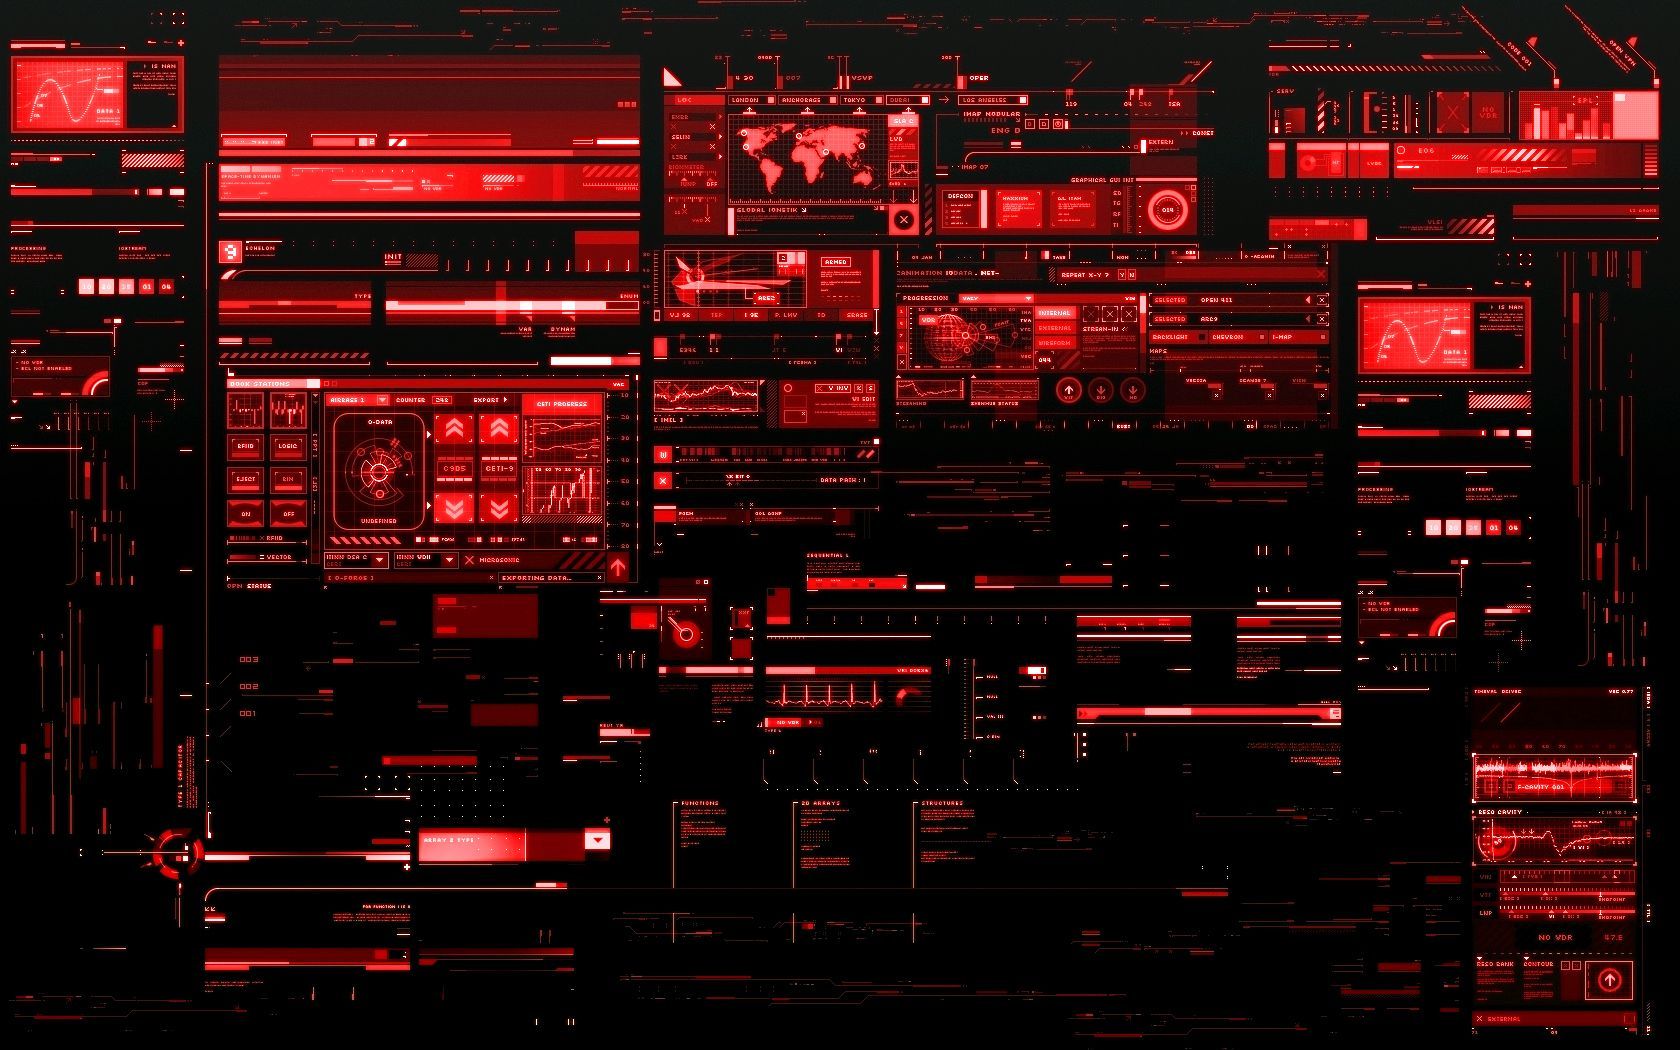 Extra Wallpapers - Hi tech desktop control center (Red)